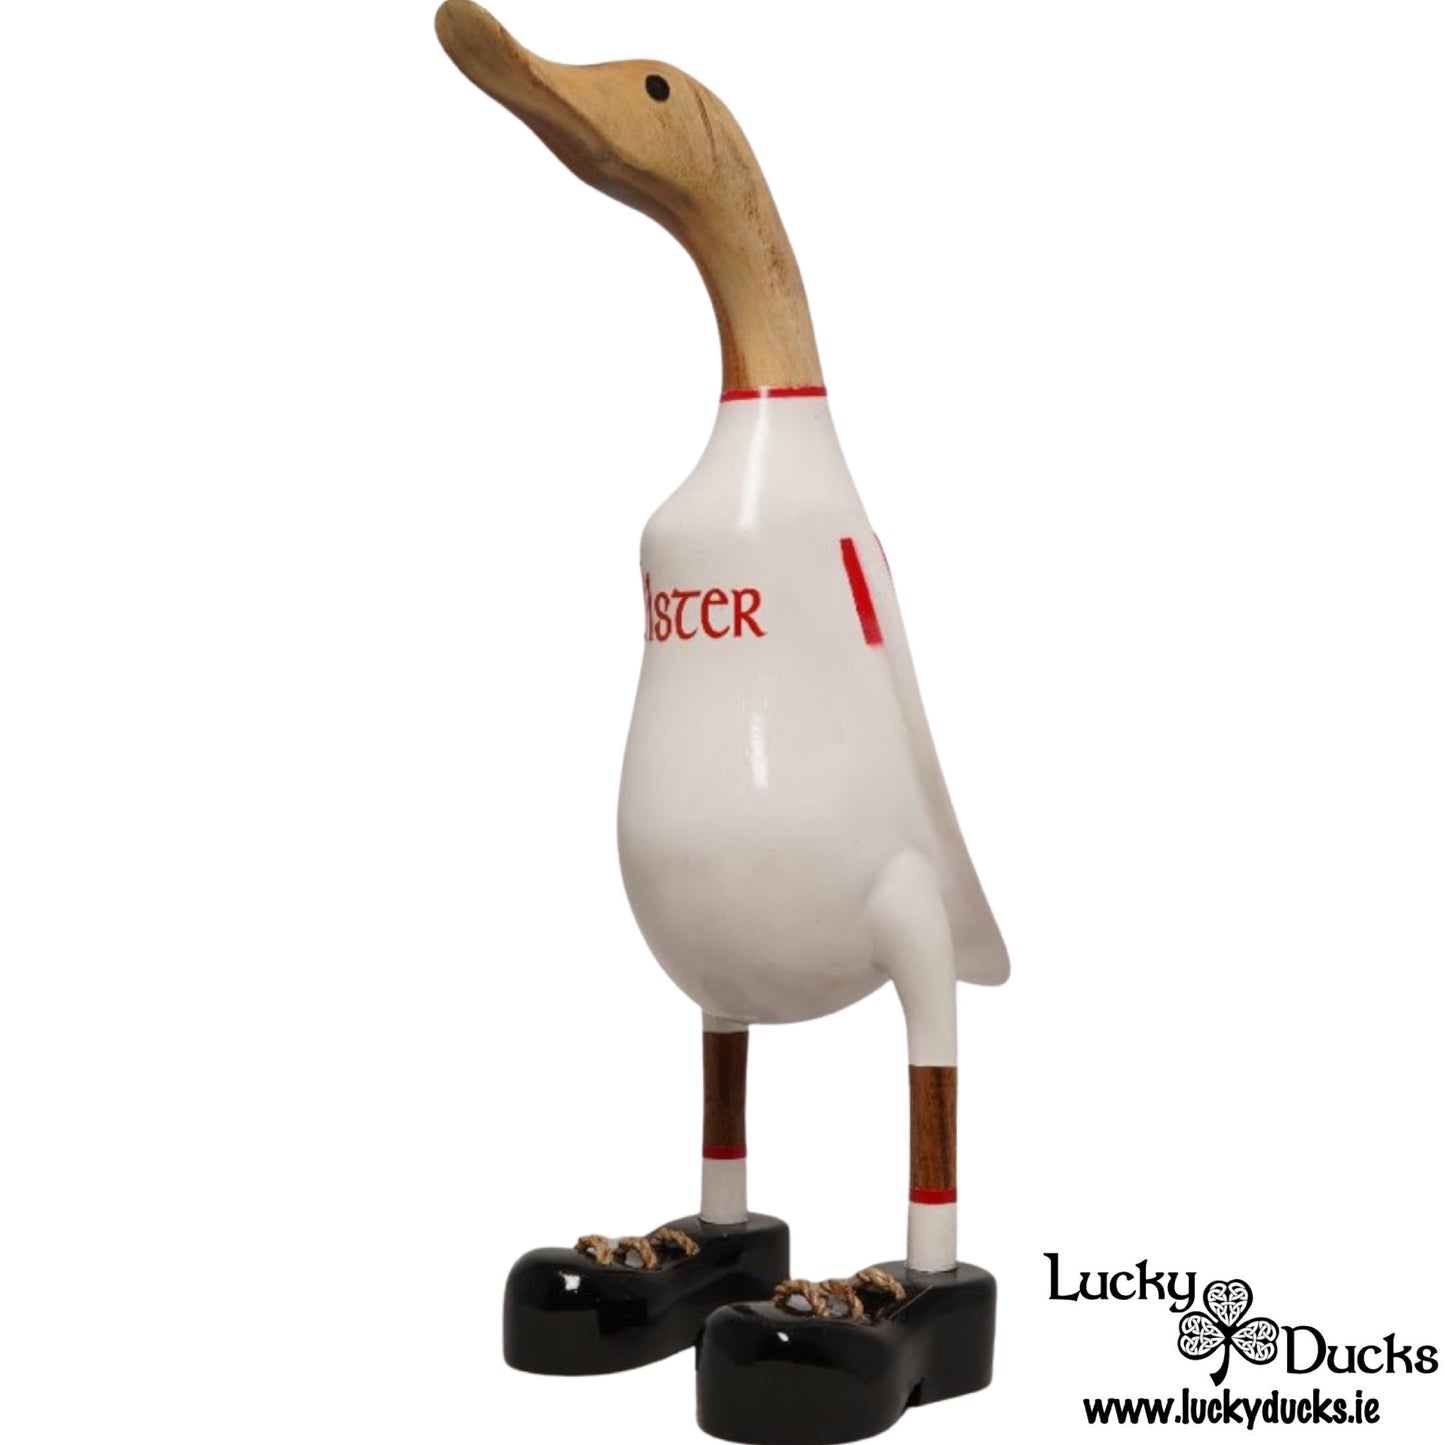 Ulster Duck